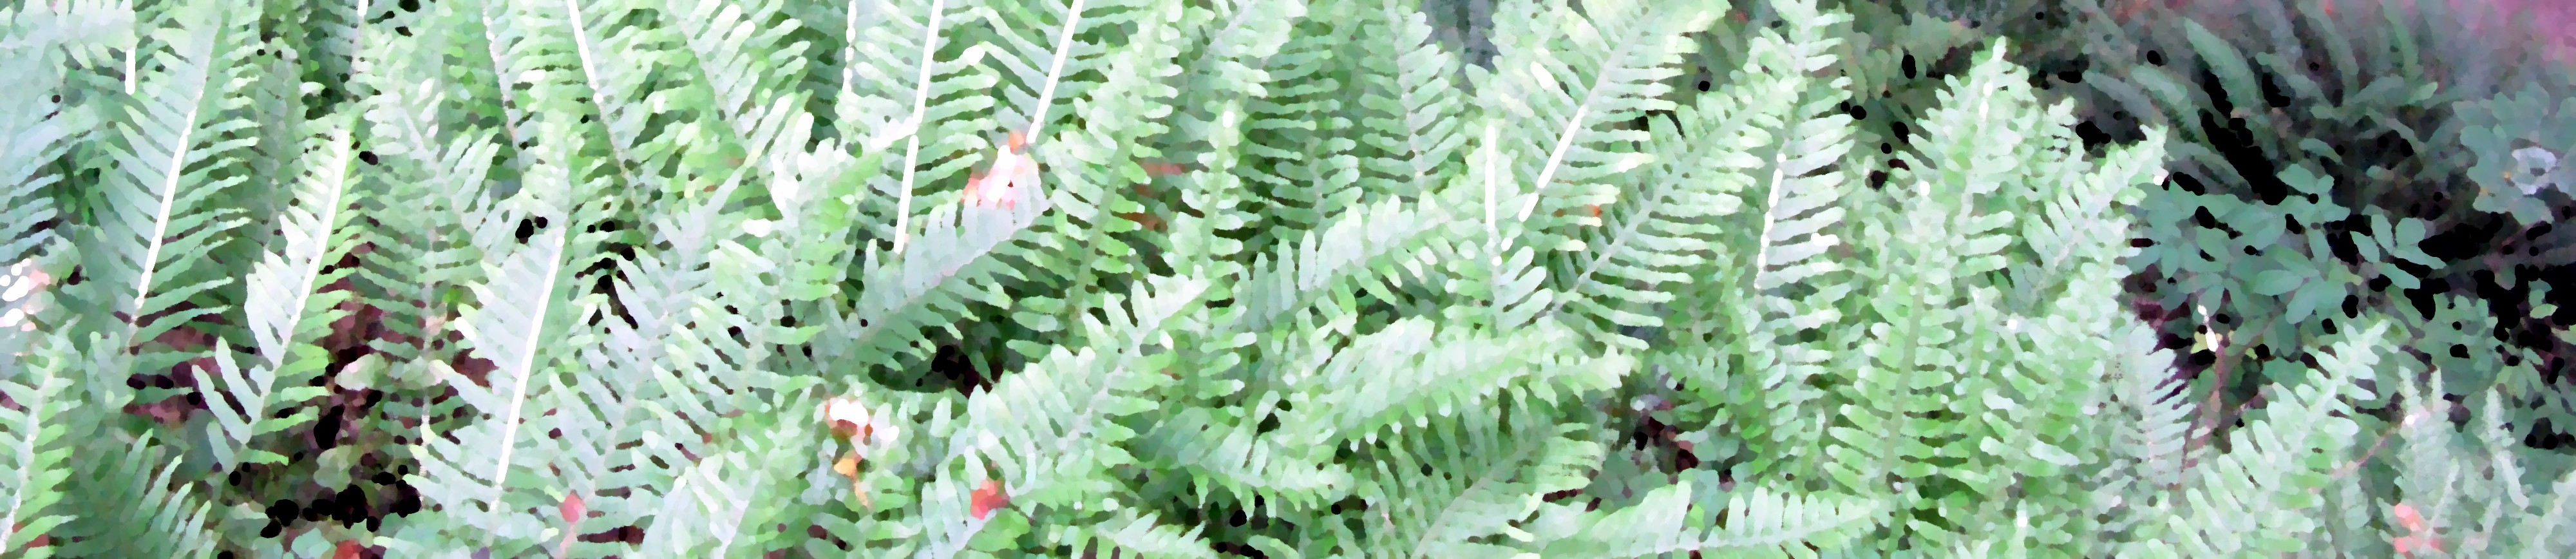 Cougar Mountain ferns